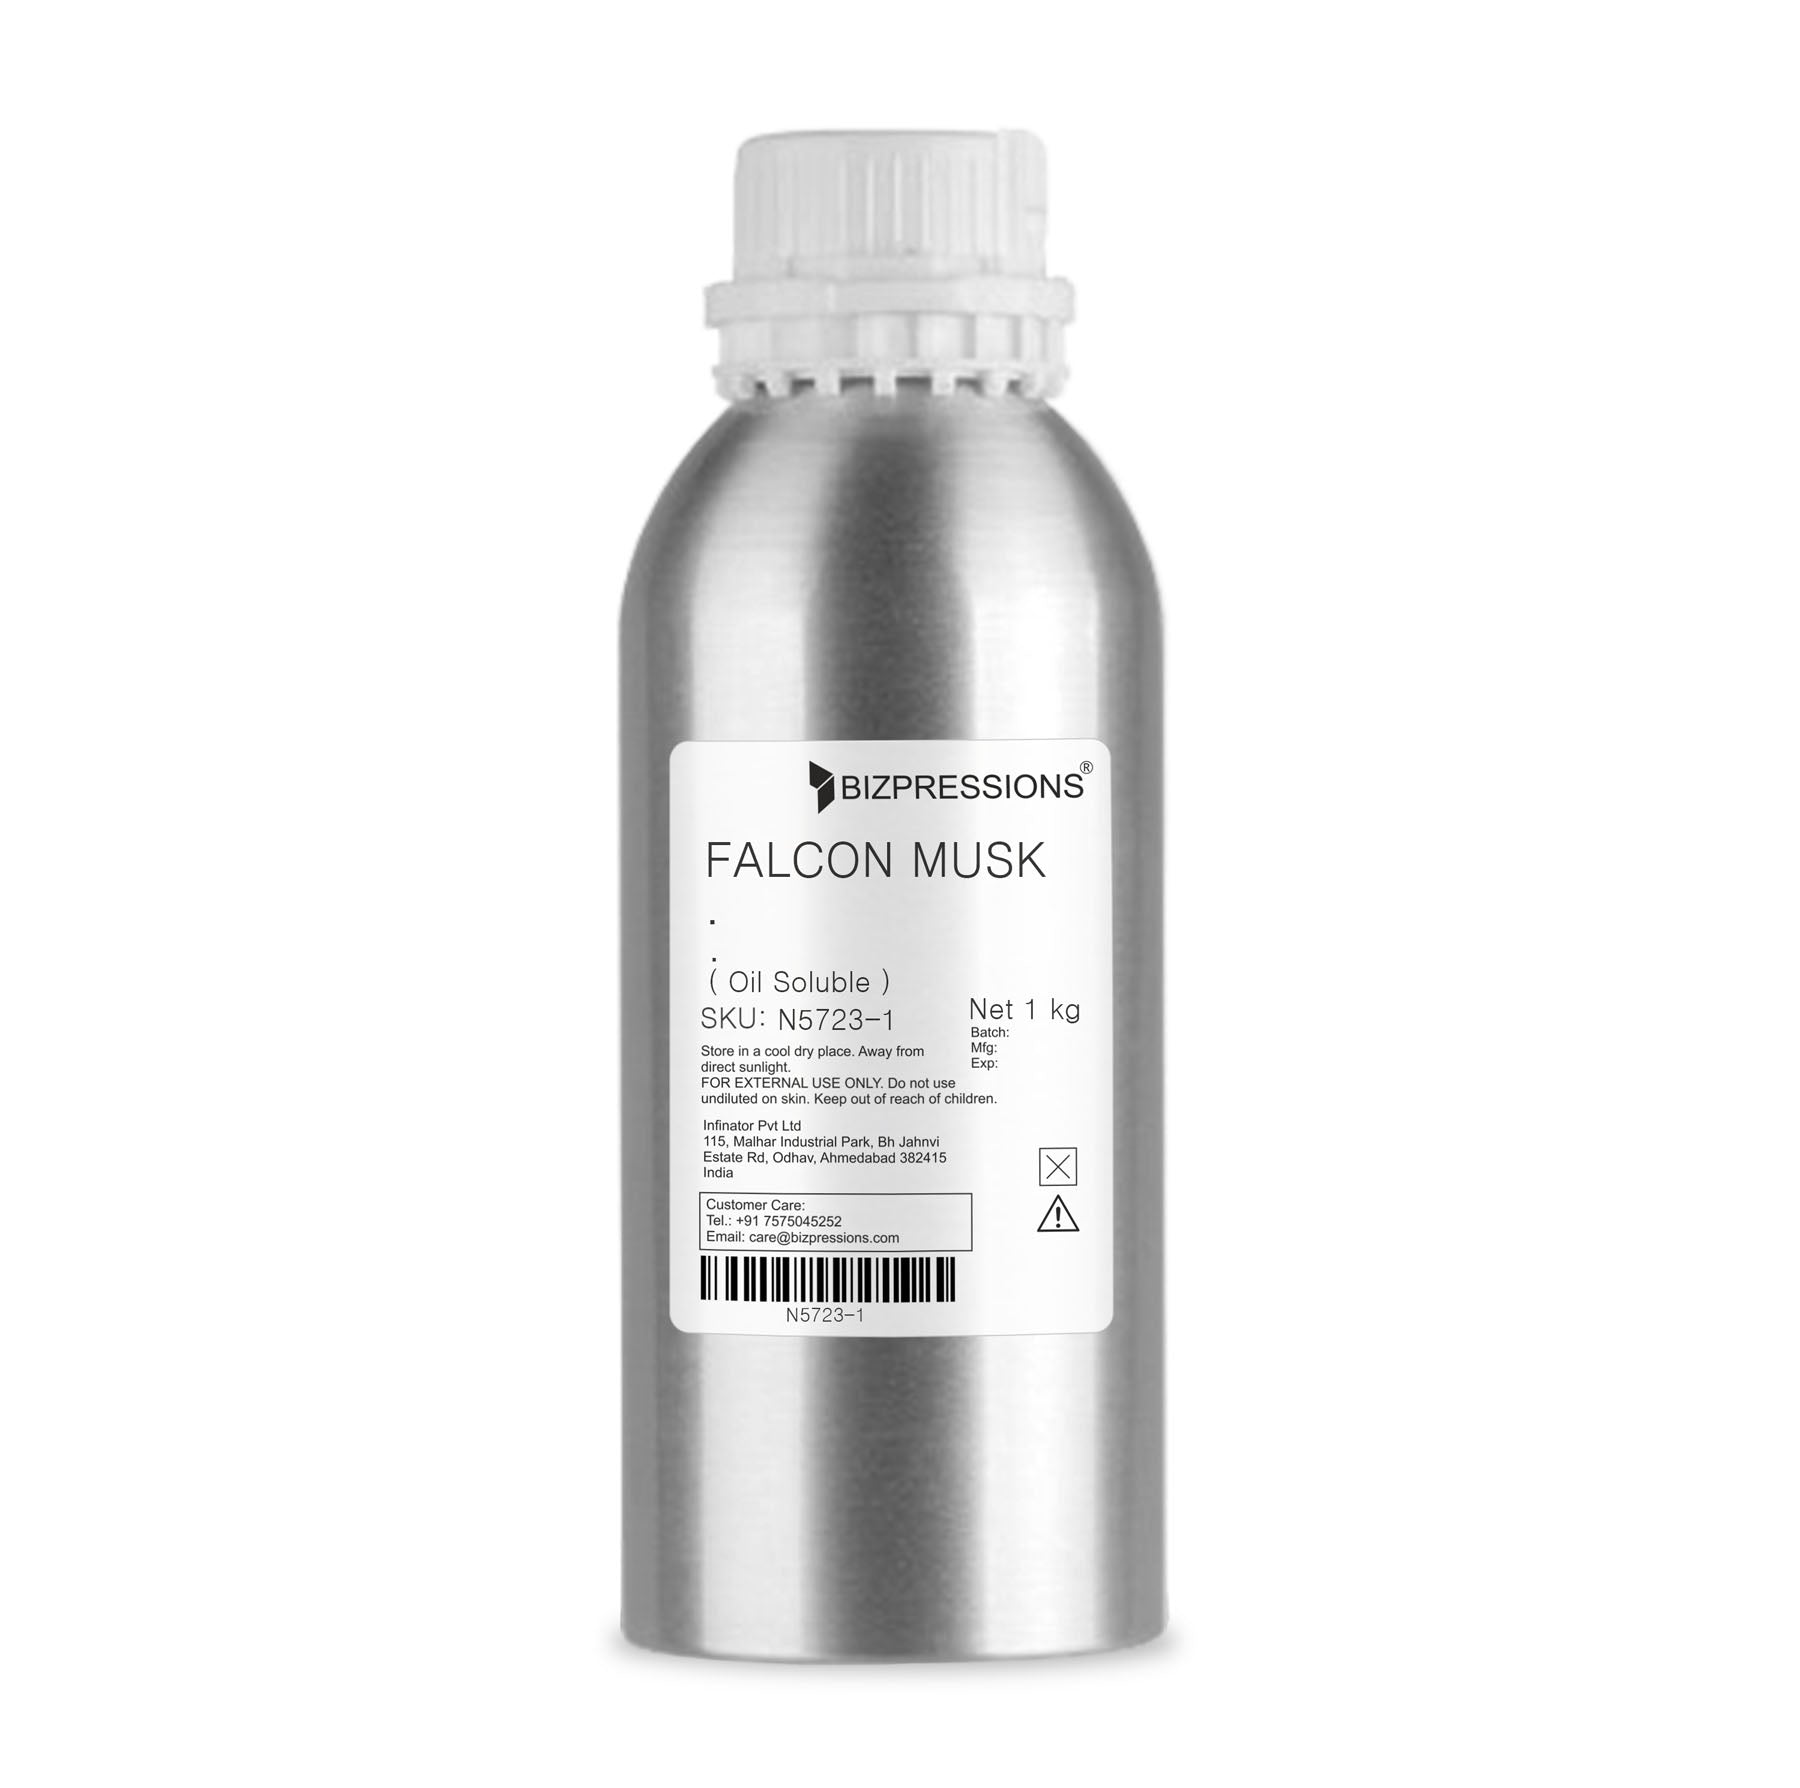 FALCON MUSK - Fragrance ( Oil Soluble ) - 1 kg